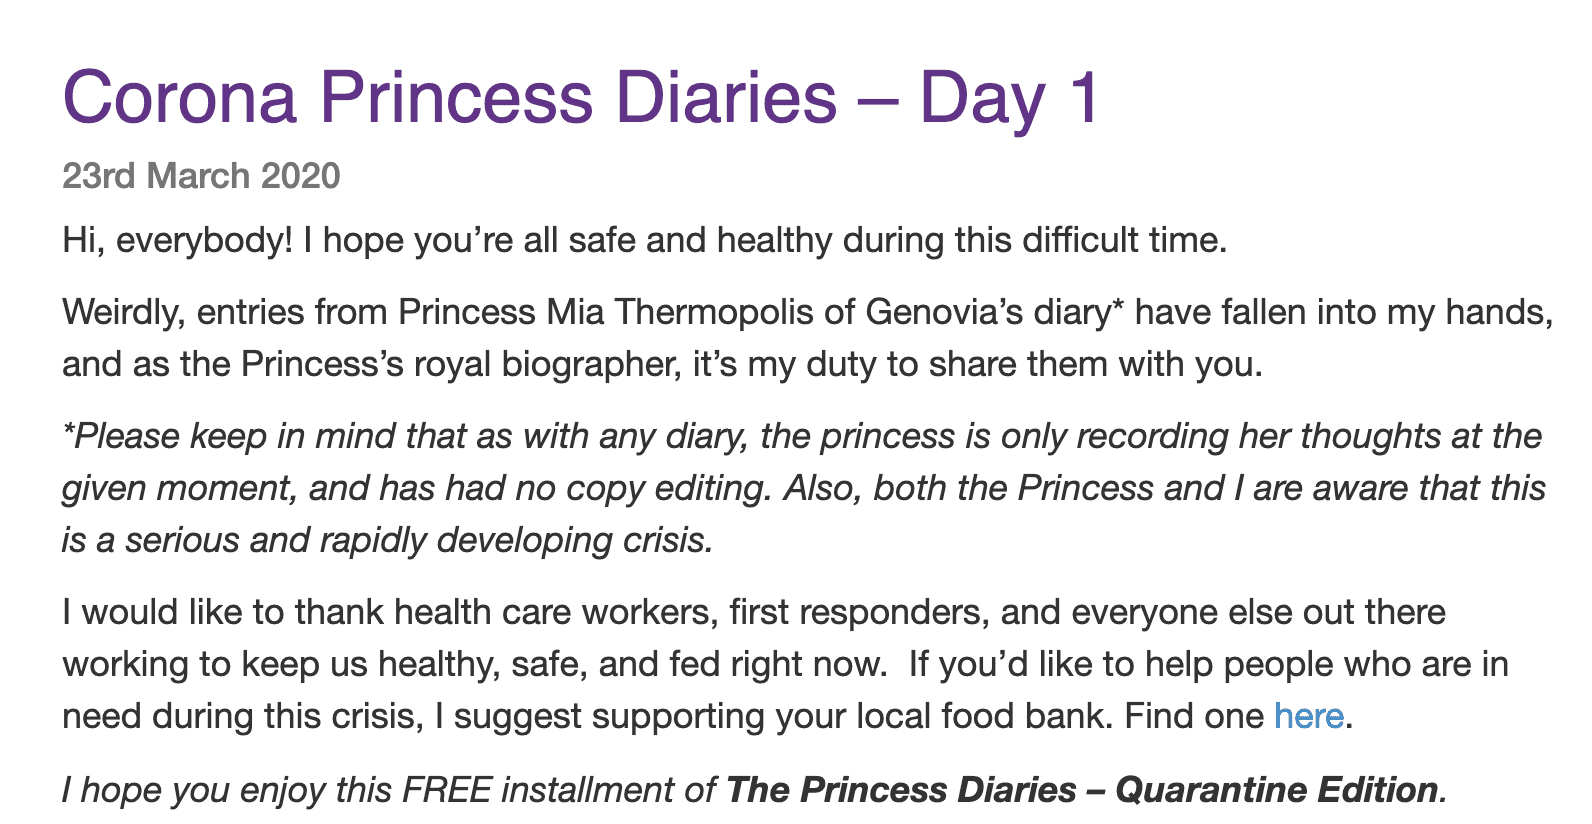 Corona Princess Diaries - Day 1 (Introduction)